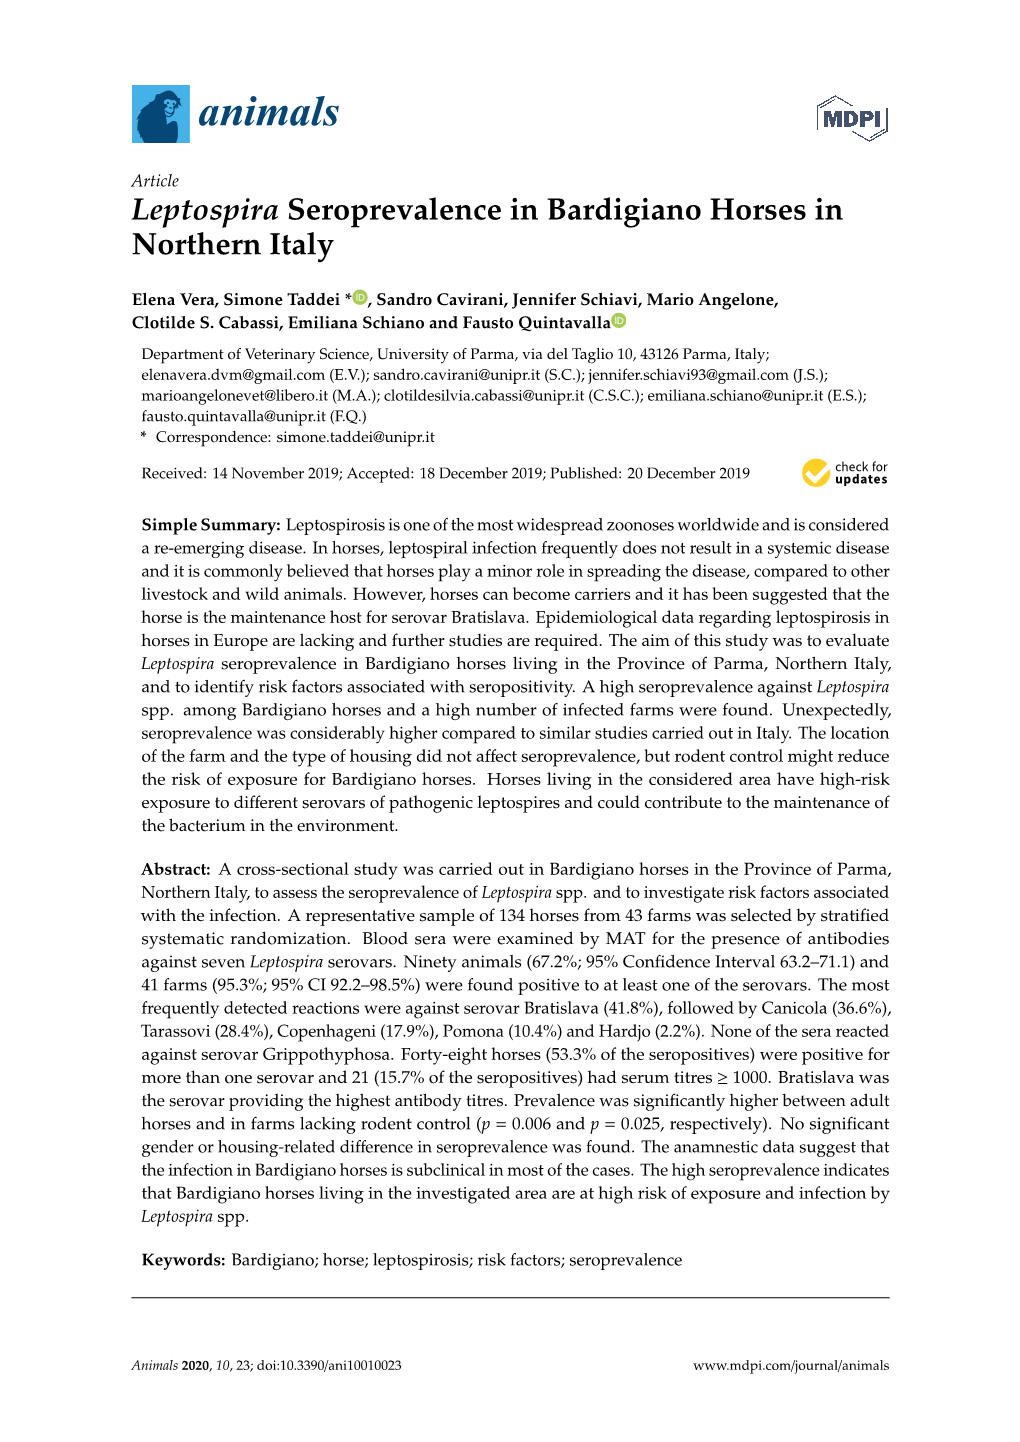 Leptospira Seroprevalence in Bardigiano Horses in Northern Italy